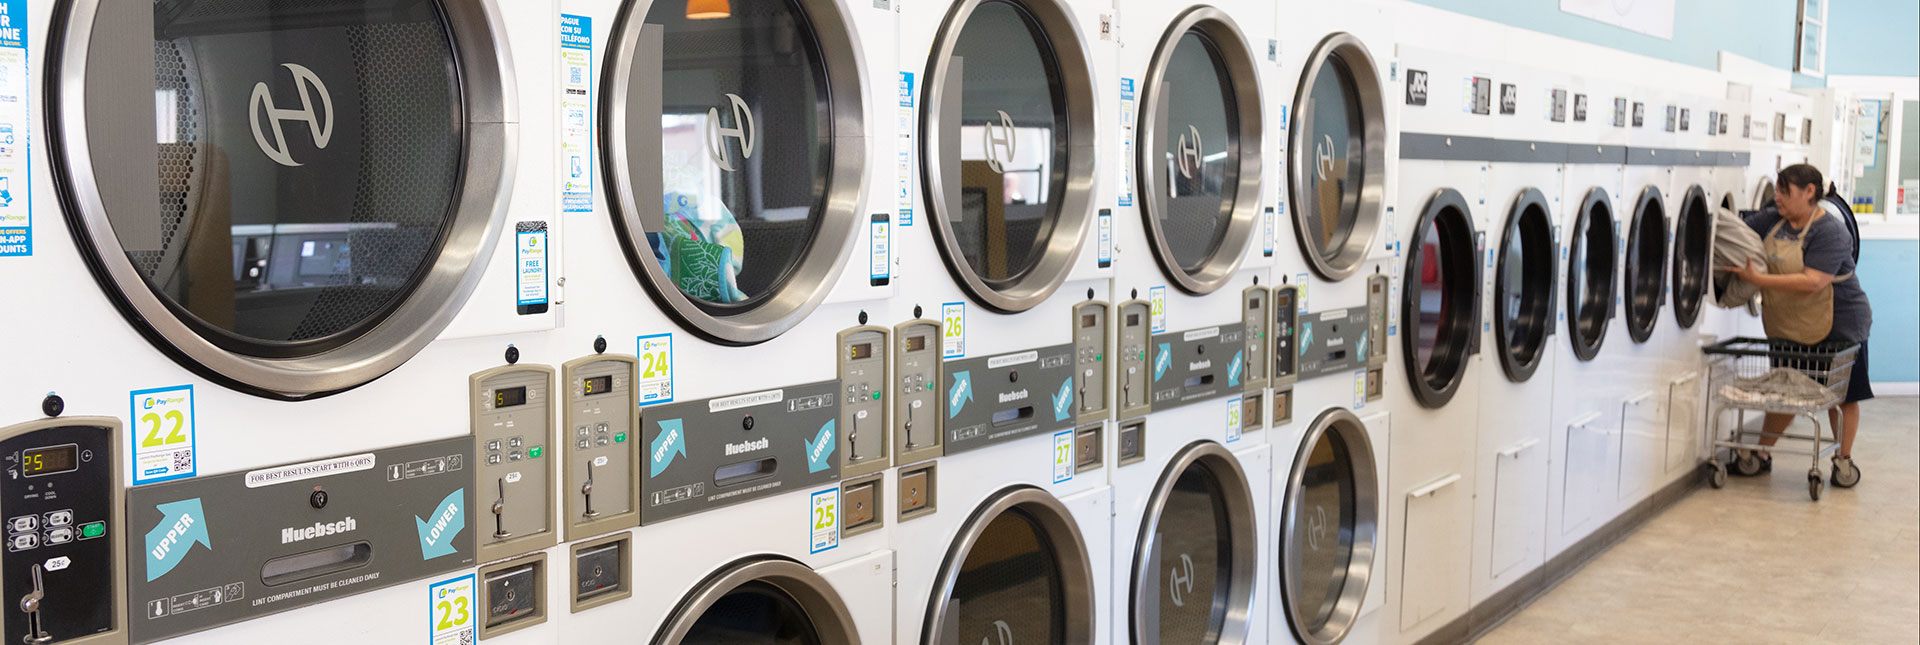 Atascadero fluff and fold - Coin-op Laundry - laundromats - Swish and Swirl Laundromat